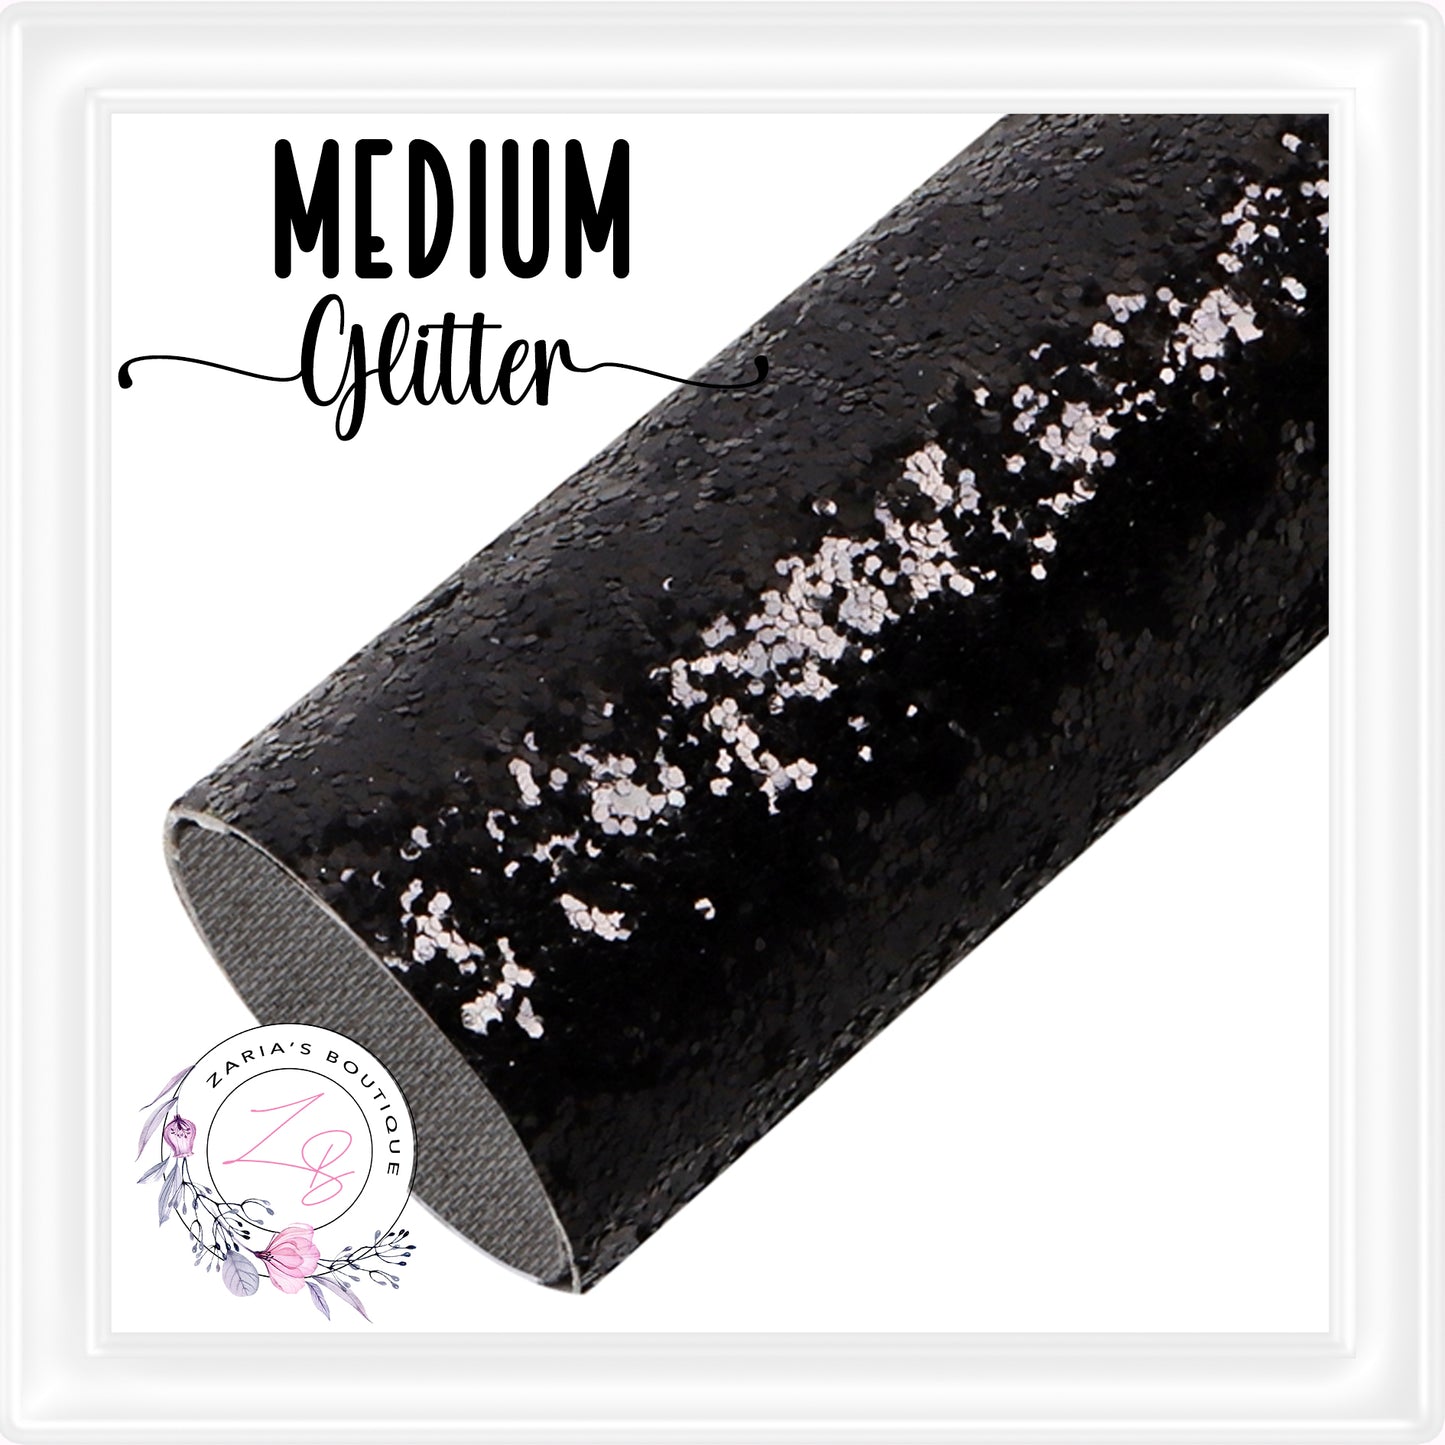 ⋅ Black ⋅ Medium Glitter Craft Fabric Sheets ⋅